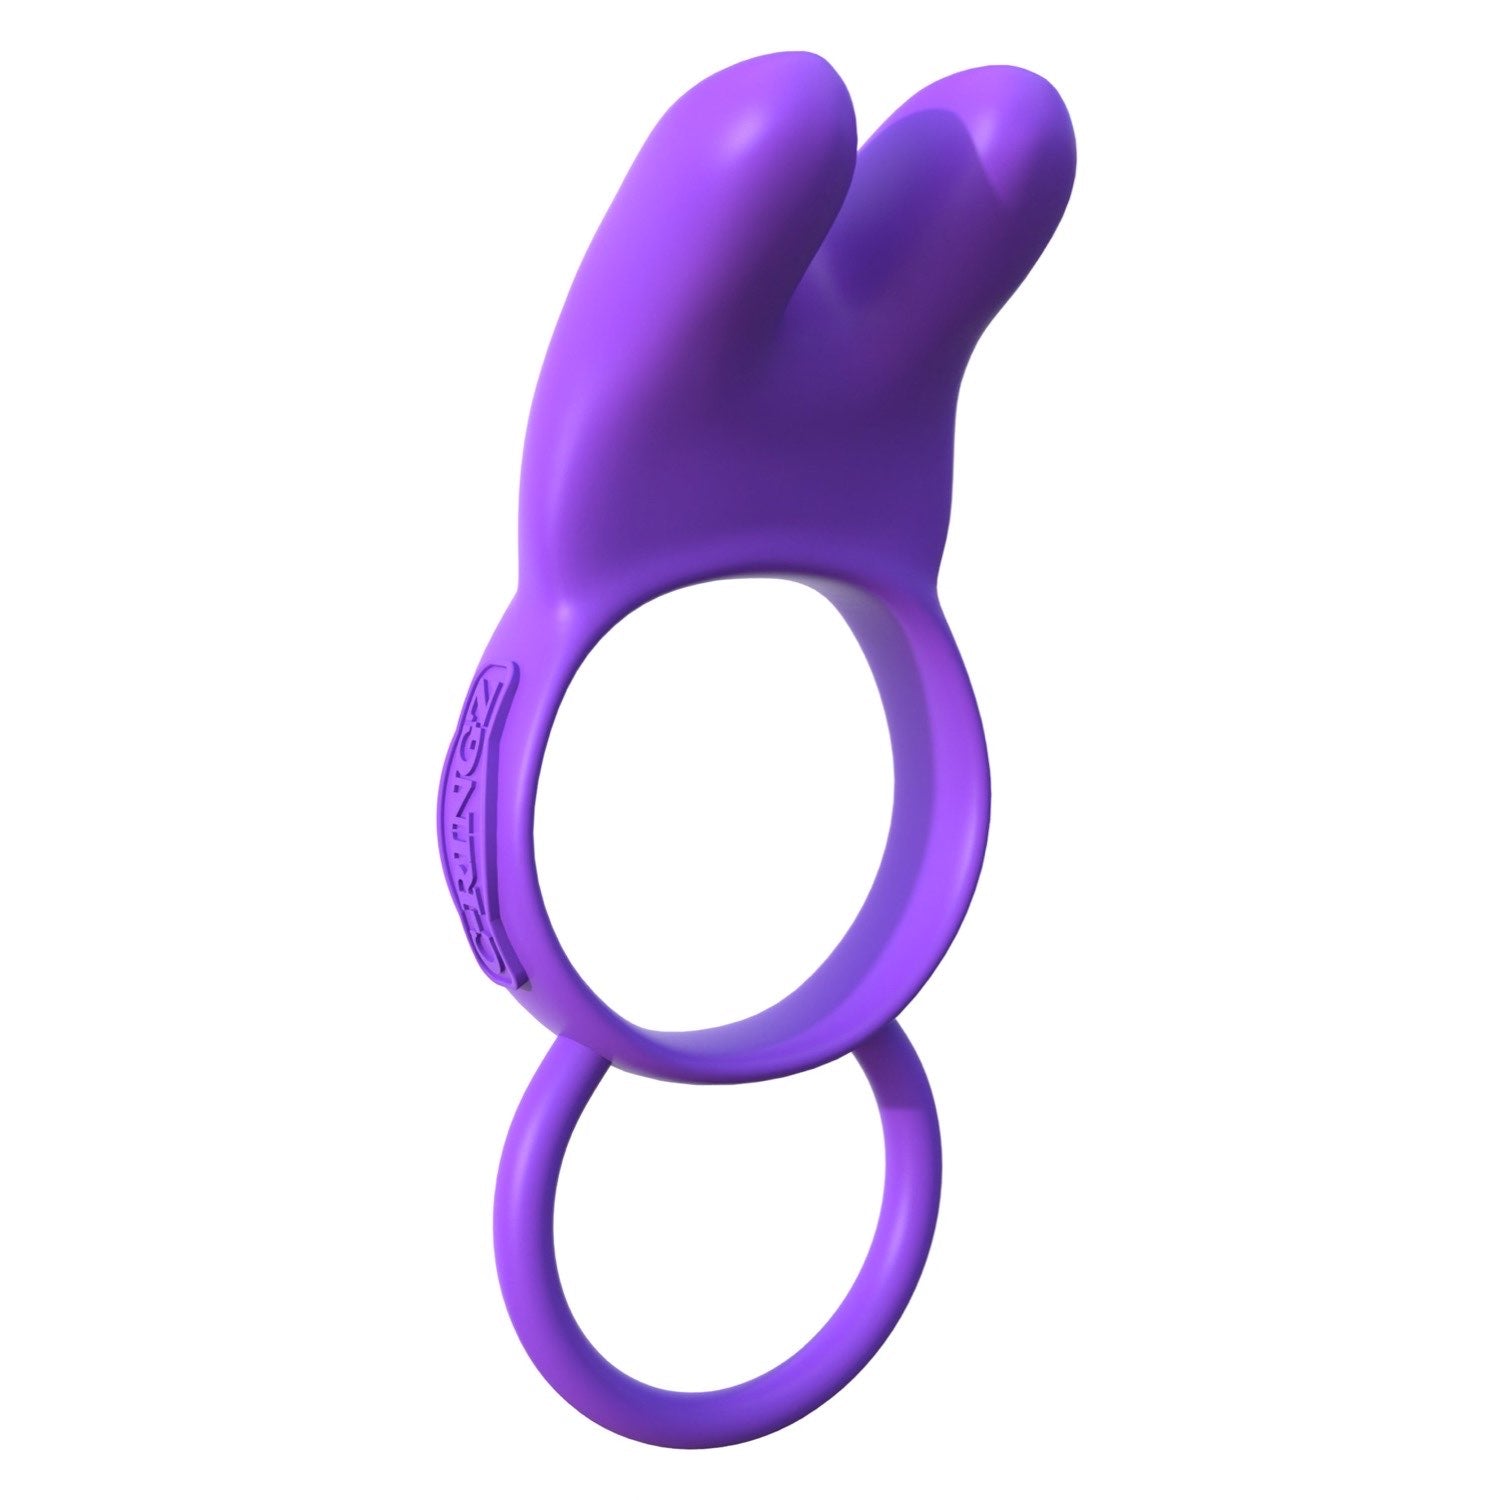 Fantasy C-Ringz Fantasy C-ringz Twin Teazer Rabbit Ring - Purple Vibrating Cock Ring by Pipedream